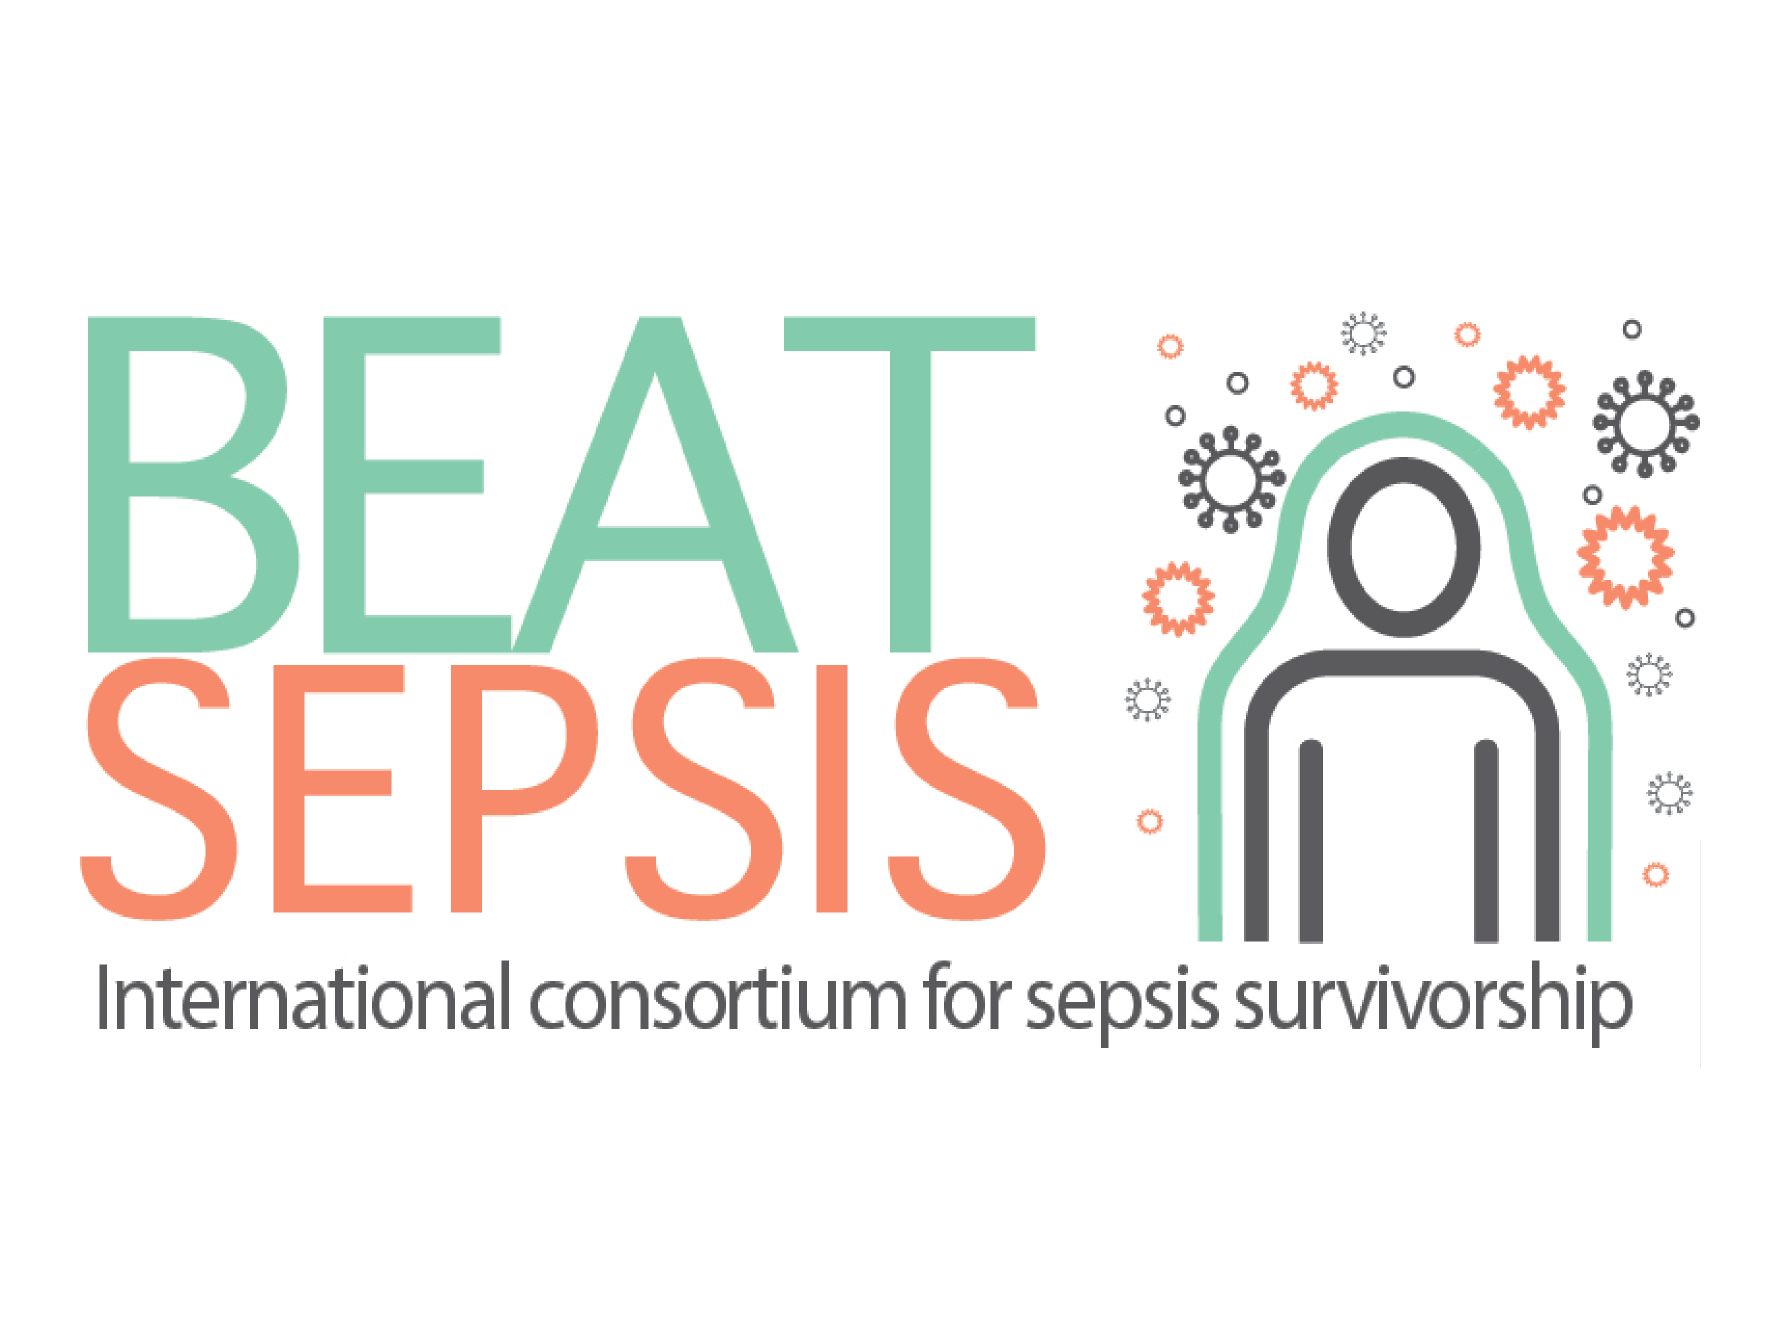 BEAT SEPSIS - The International Consortium for Sepsis Survivorship